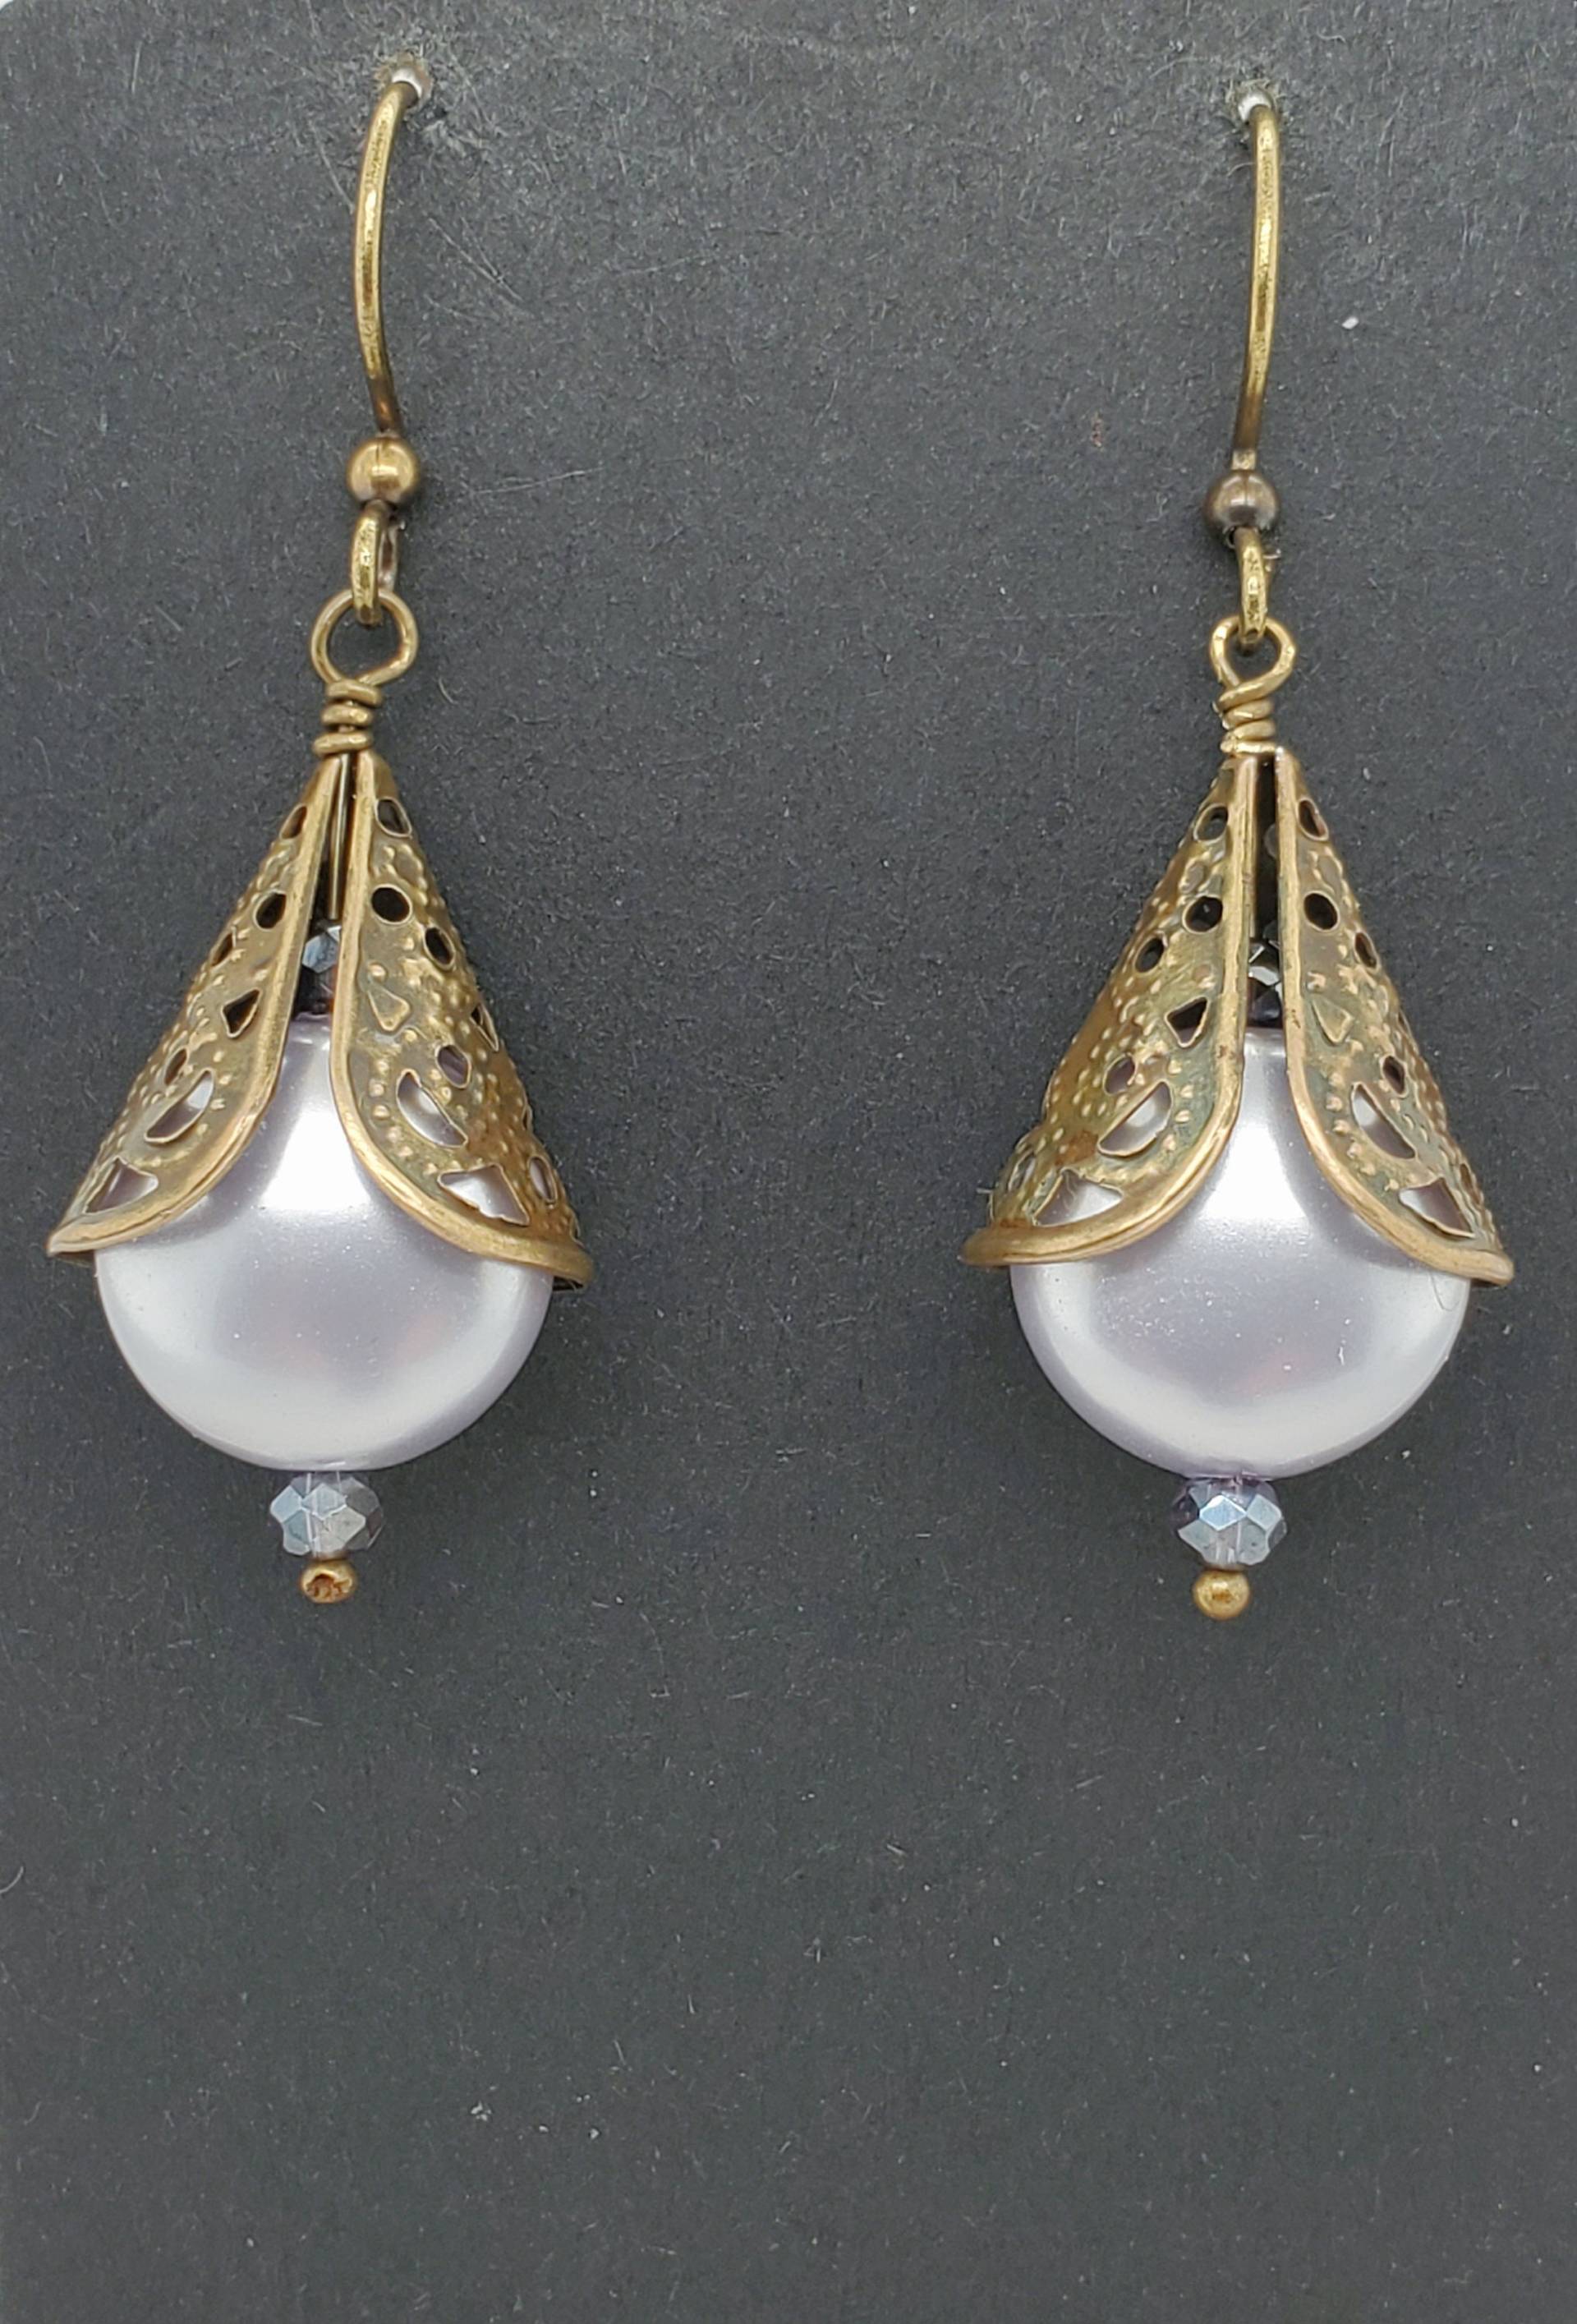 Lavendel Perlen Ohrringe Haben Verschnörgelte Glasierte Perlenkappe in Antik Messing Ton, Tansanit Rondelle Am Sockel, Ohrdrähte von TakeenArts